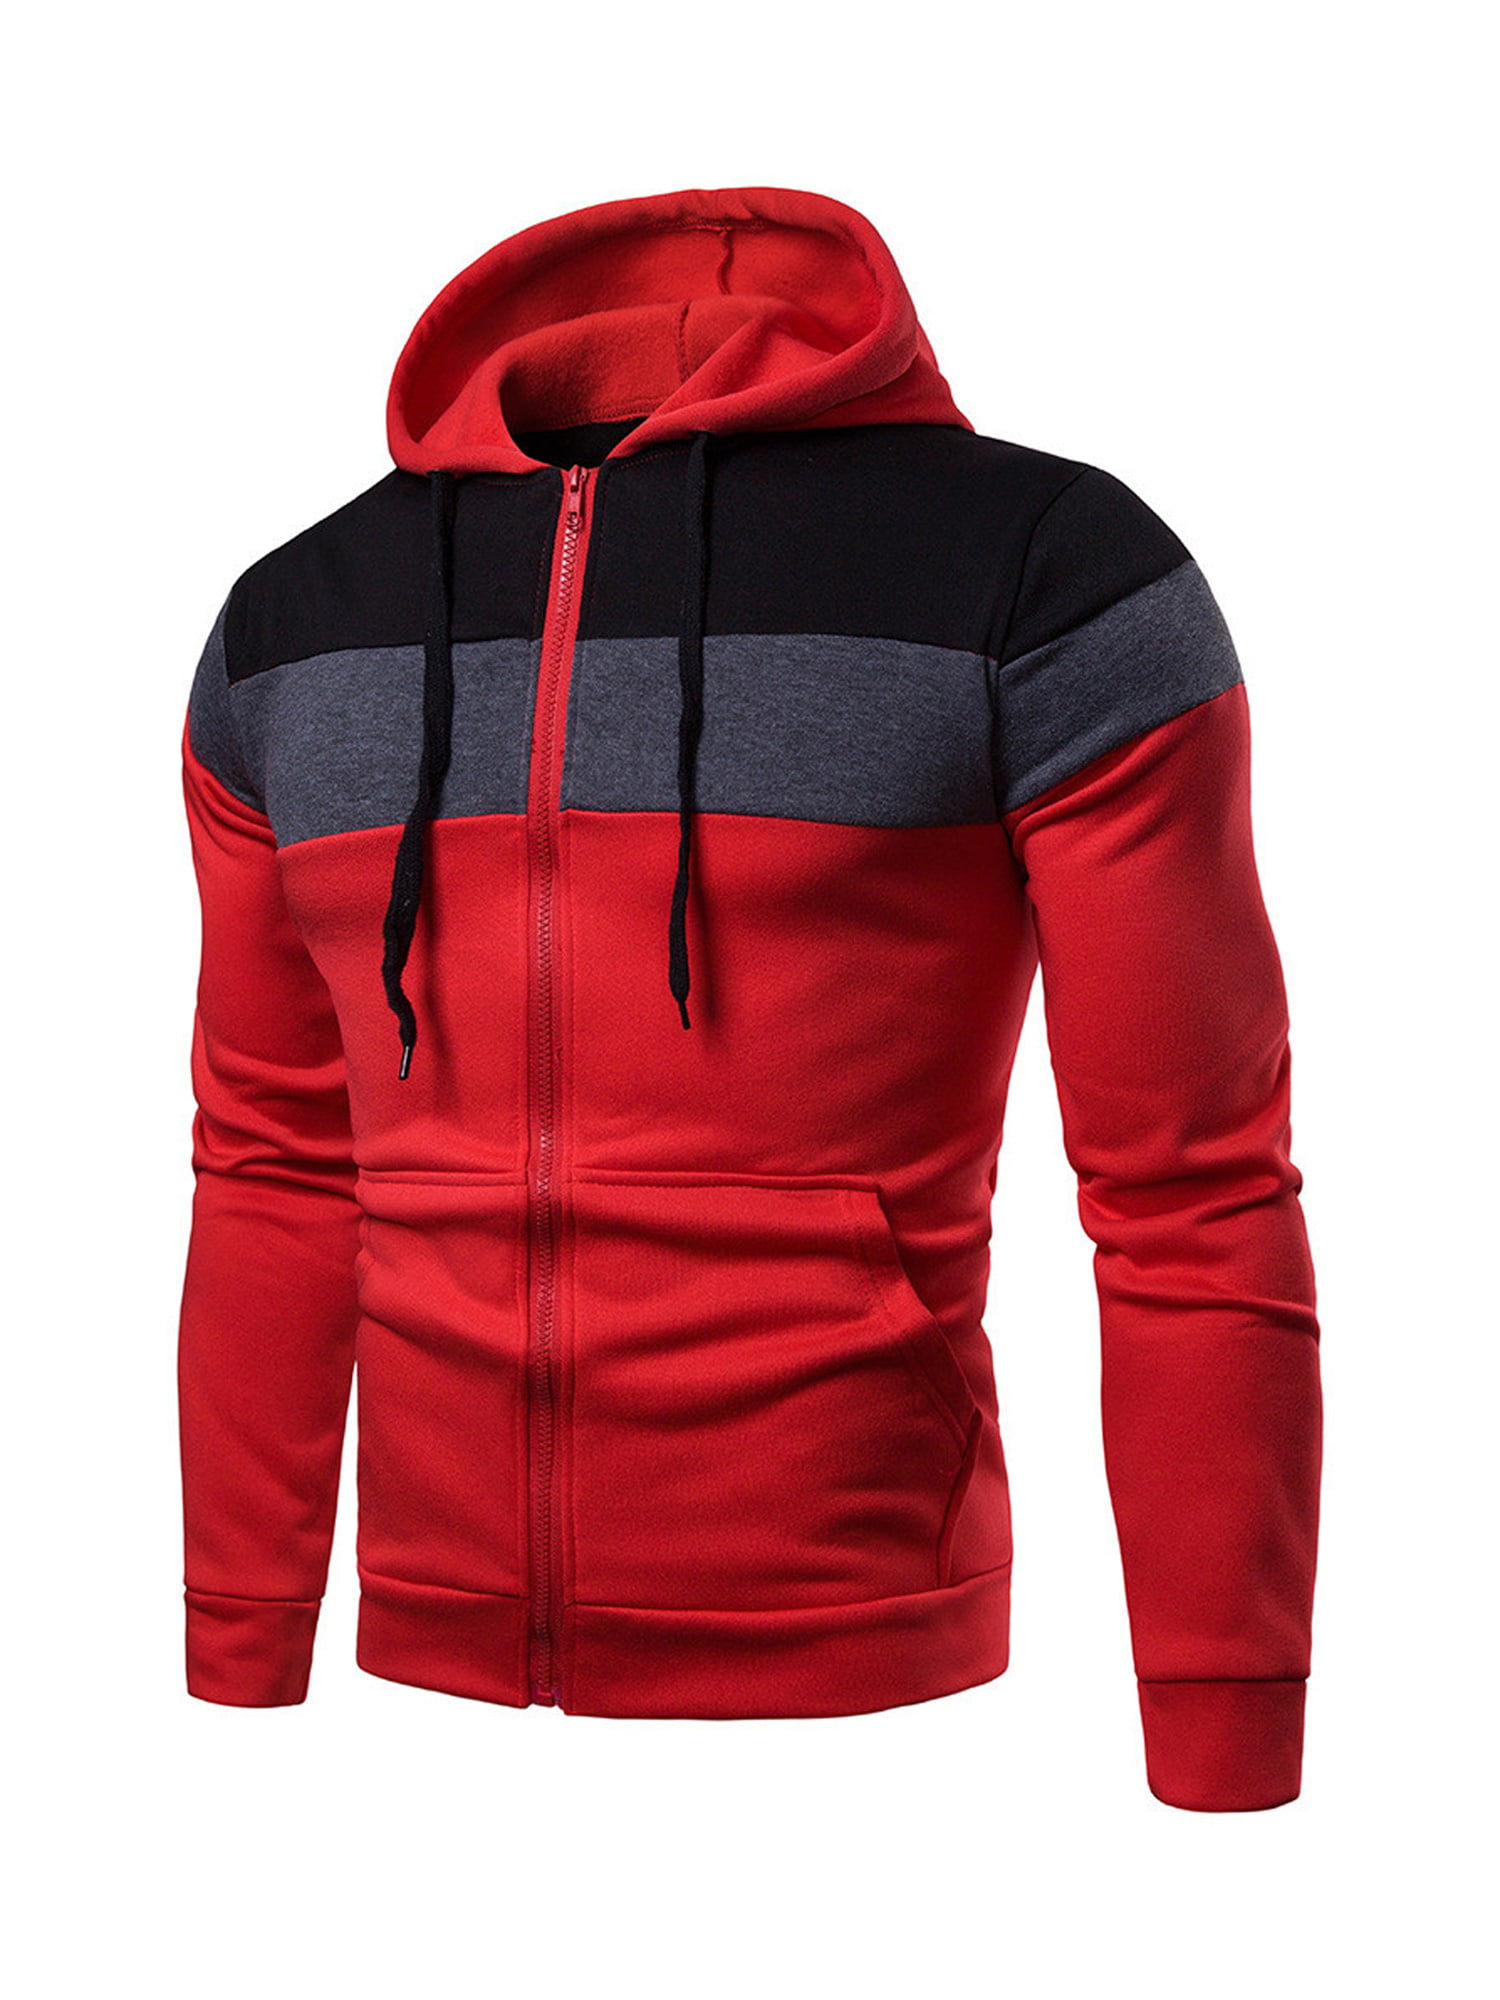 Men Casual Hoodies Coat Jacket Outwear Sweater Sports Jumper Loose Pullover Tops